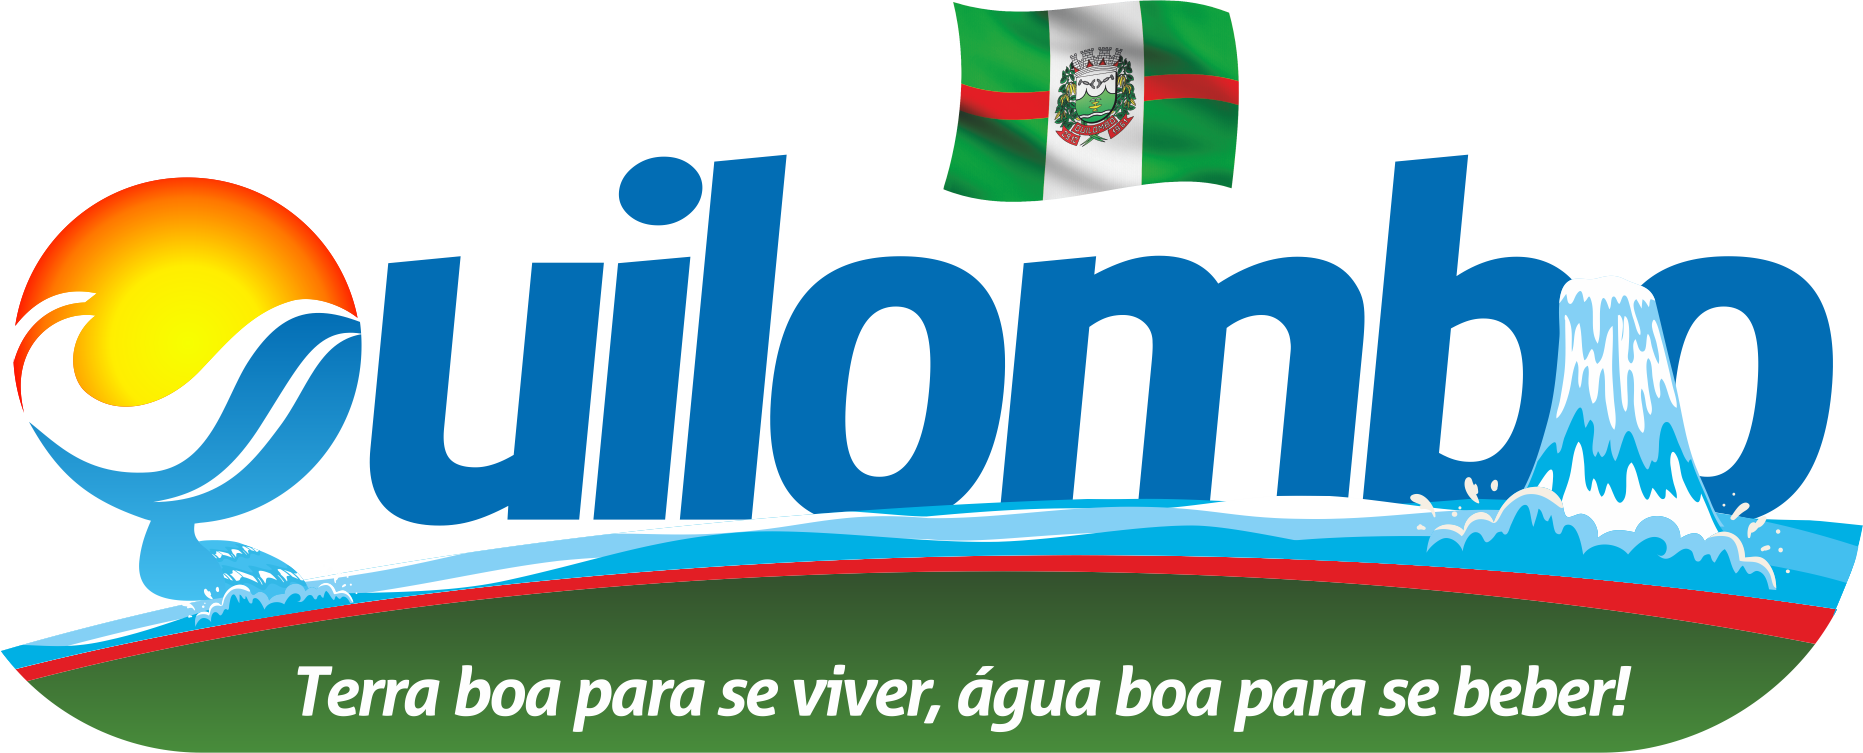 Portal Municipal de Turismo de Quilombo